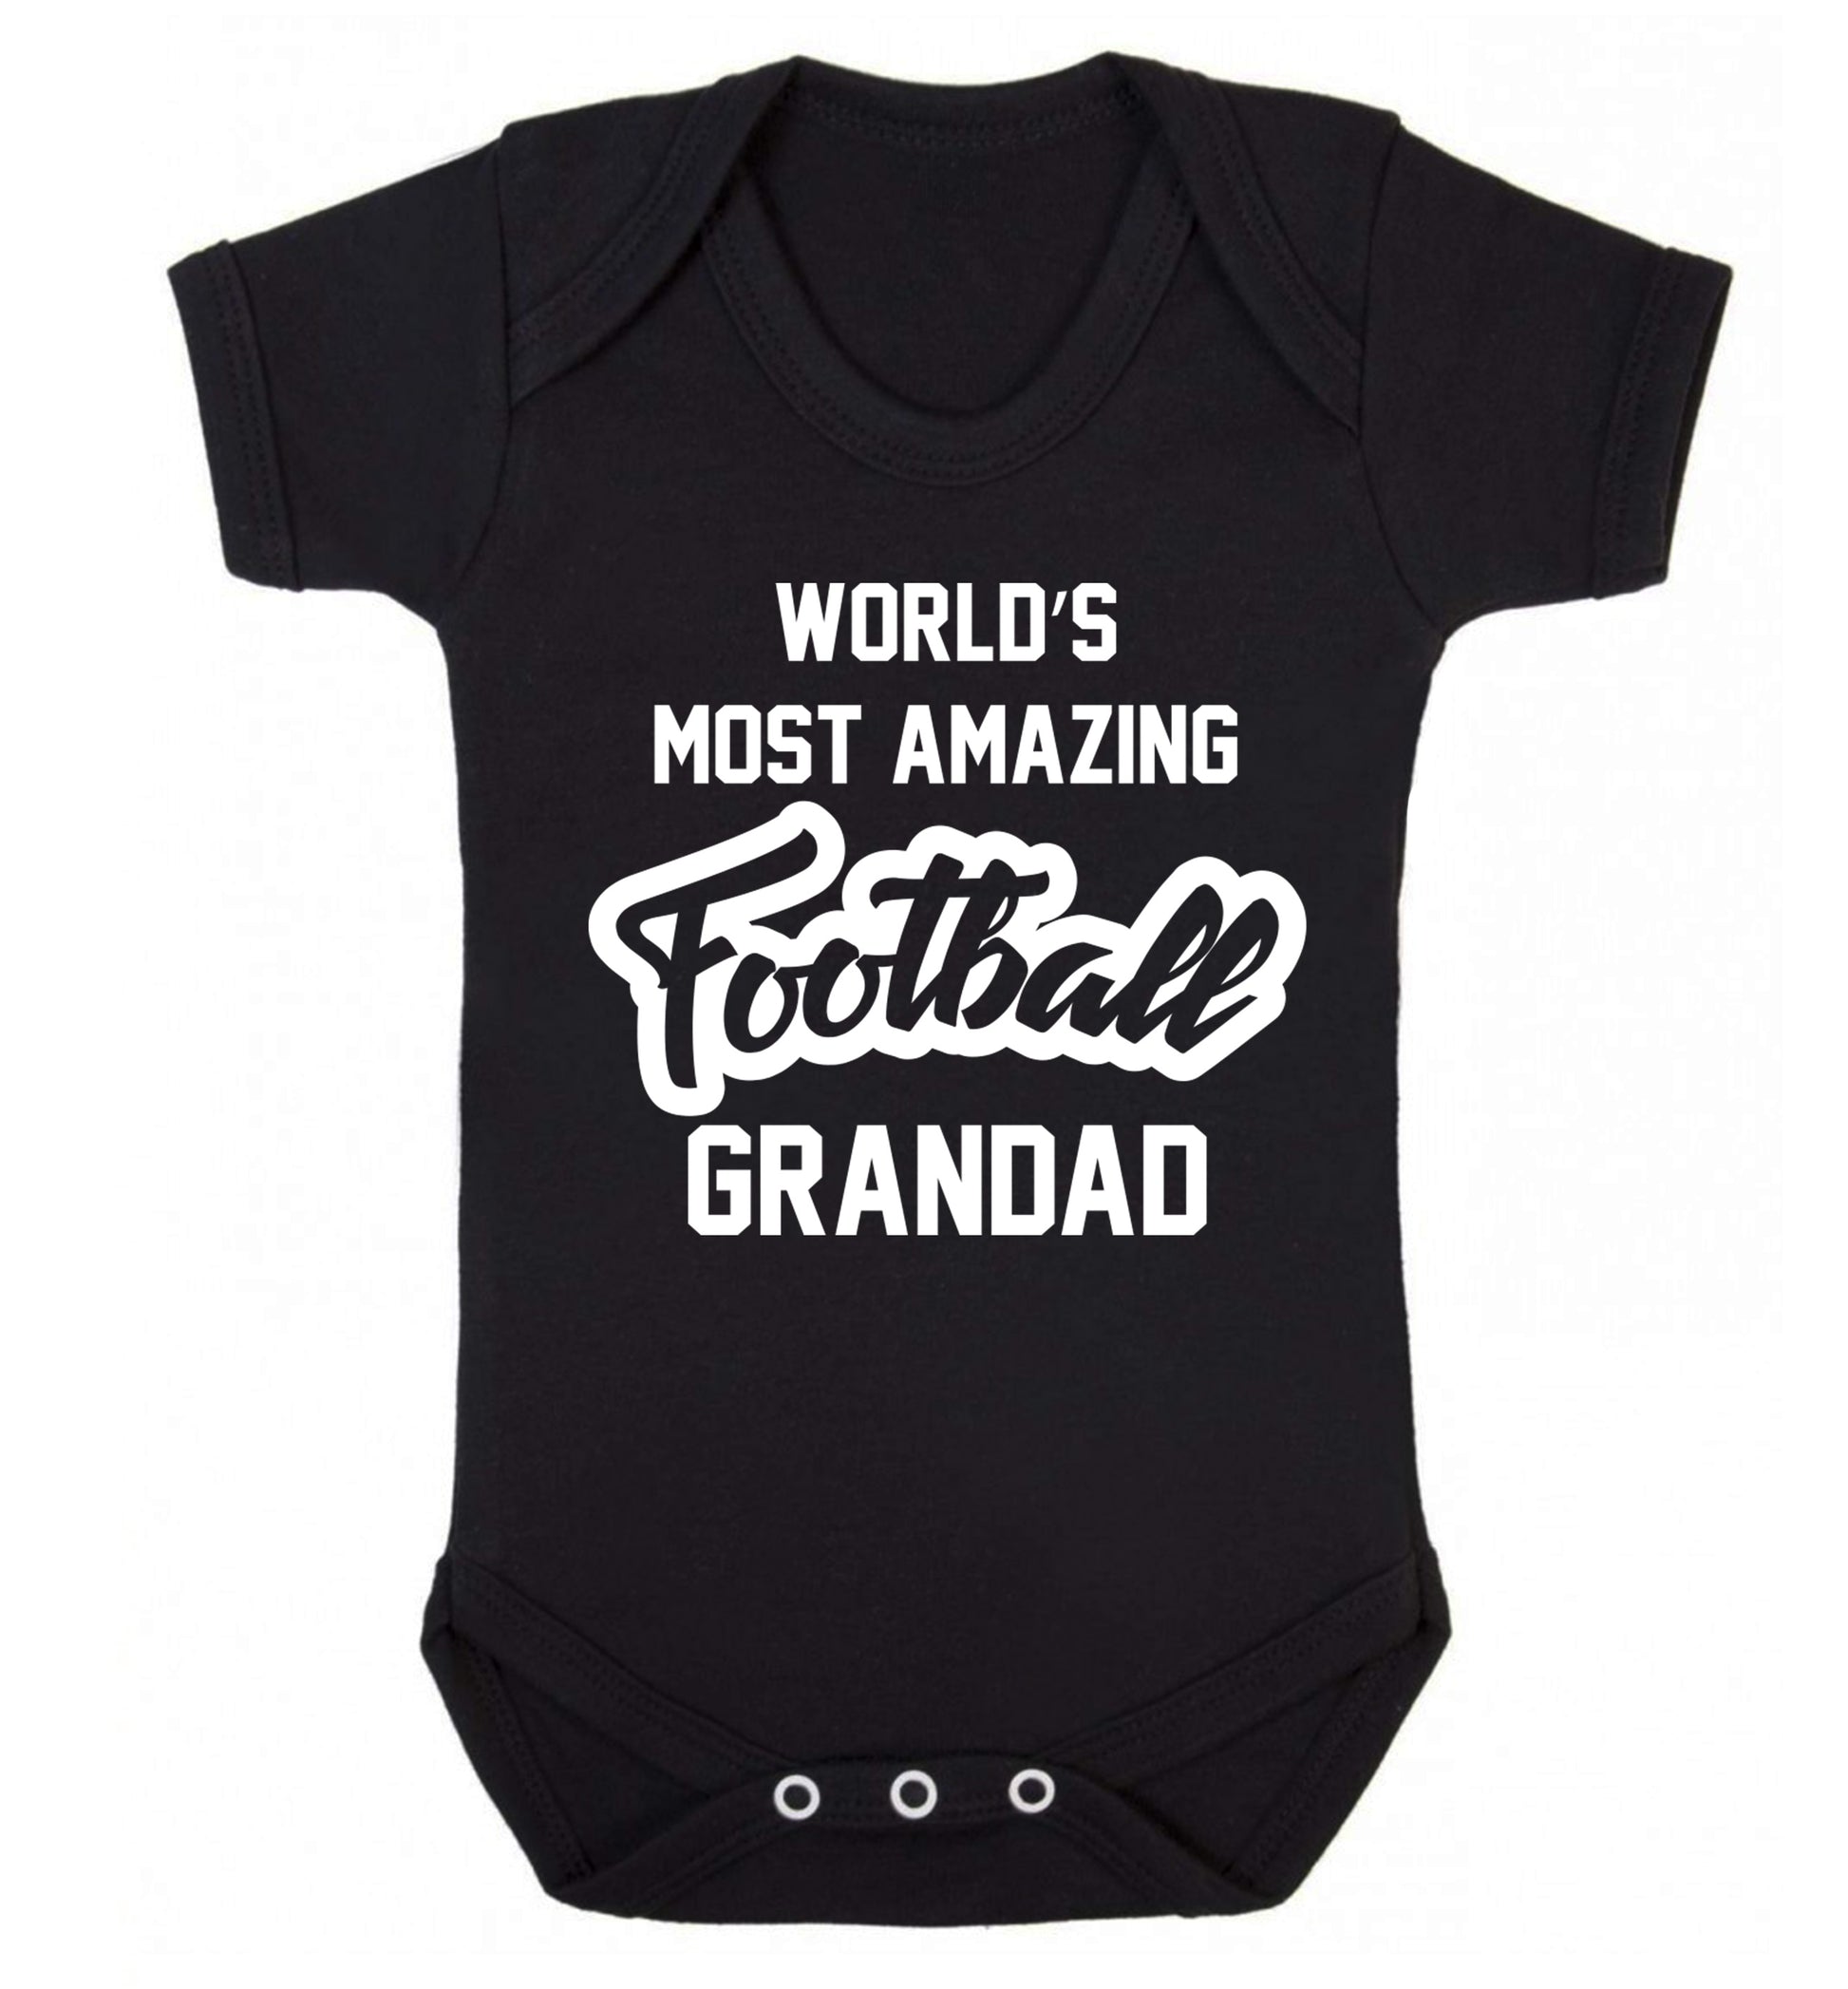 Worlds most amazing football grandad Baby Vest black 18-24 months